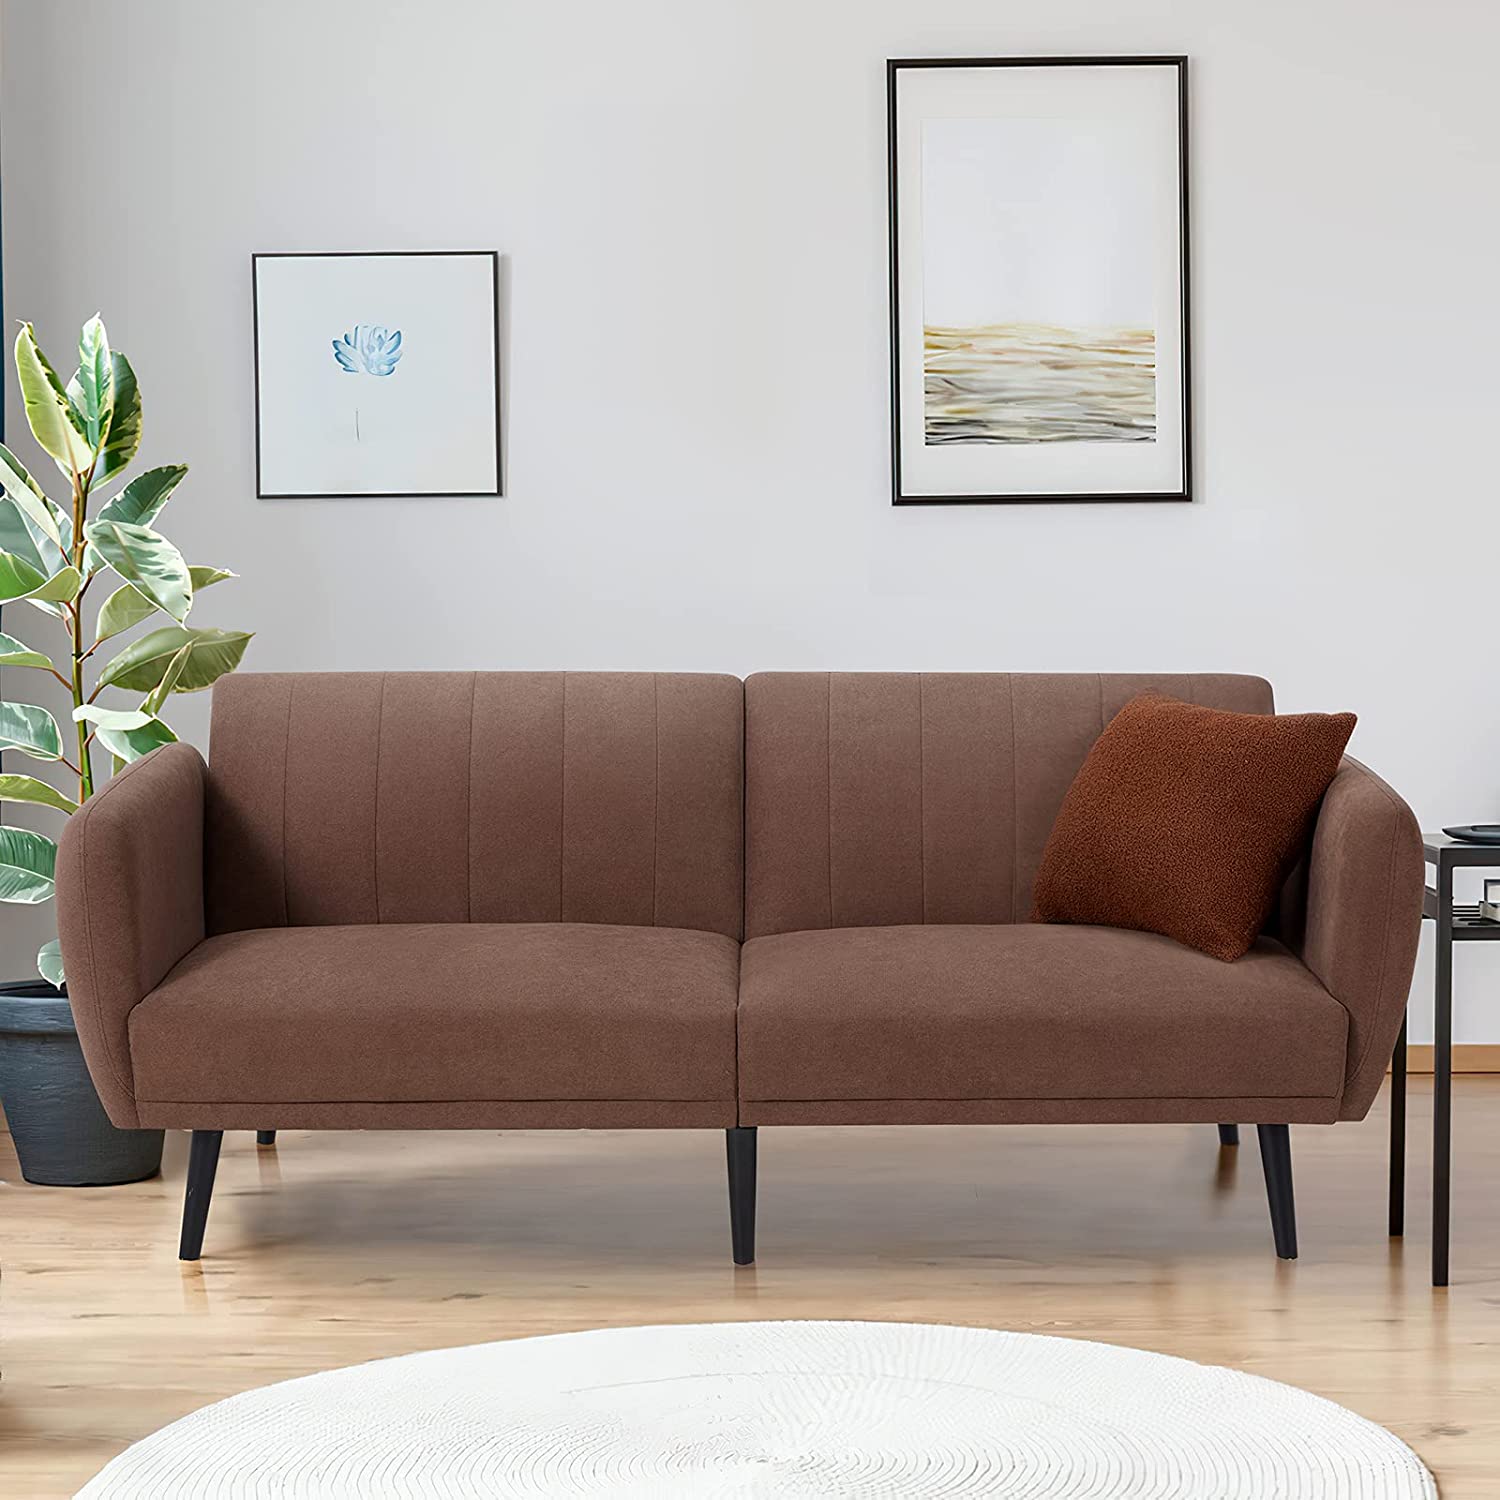 Brown Panana 2 Alduts Seater Chair Sofa Folding Lazy Sofa Bed Divan Bed 